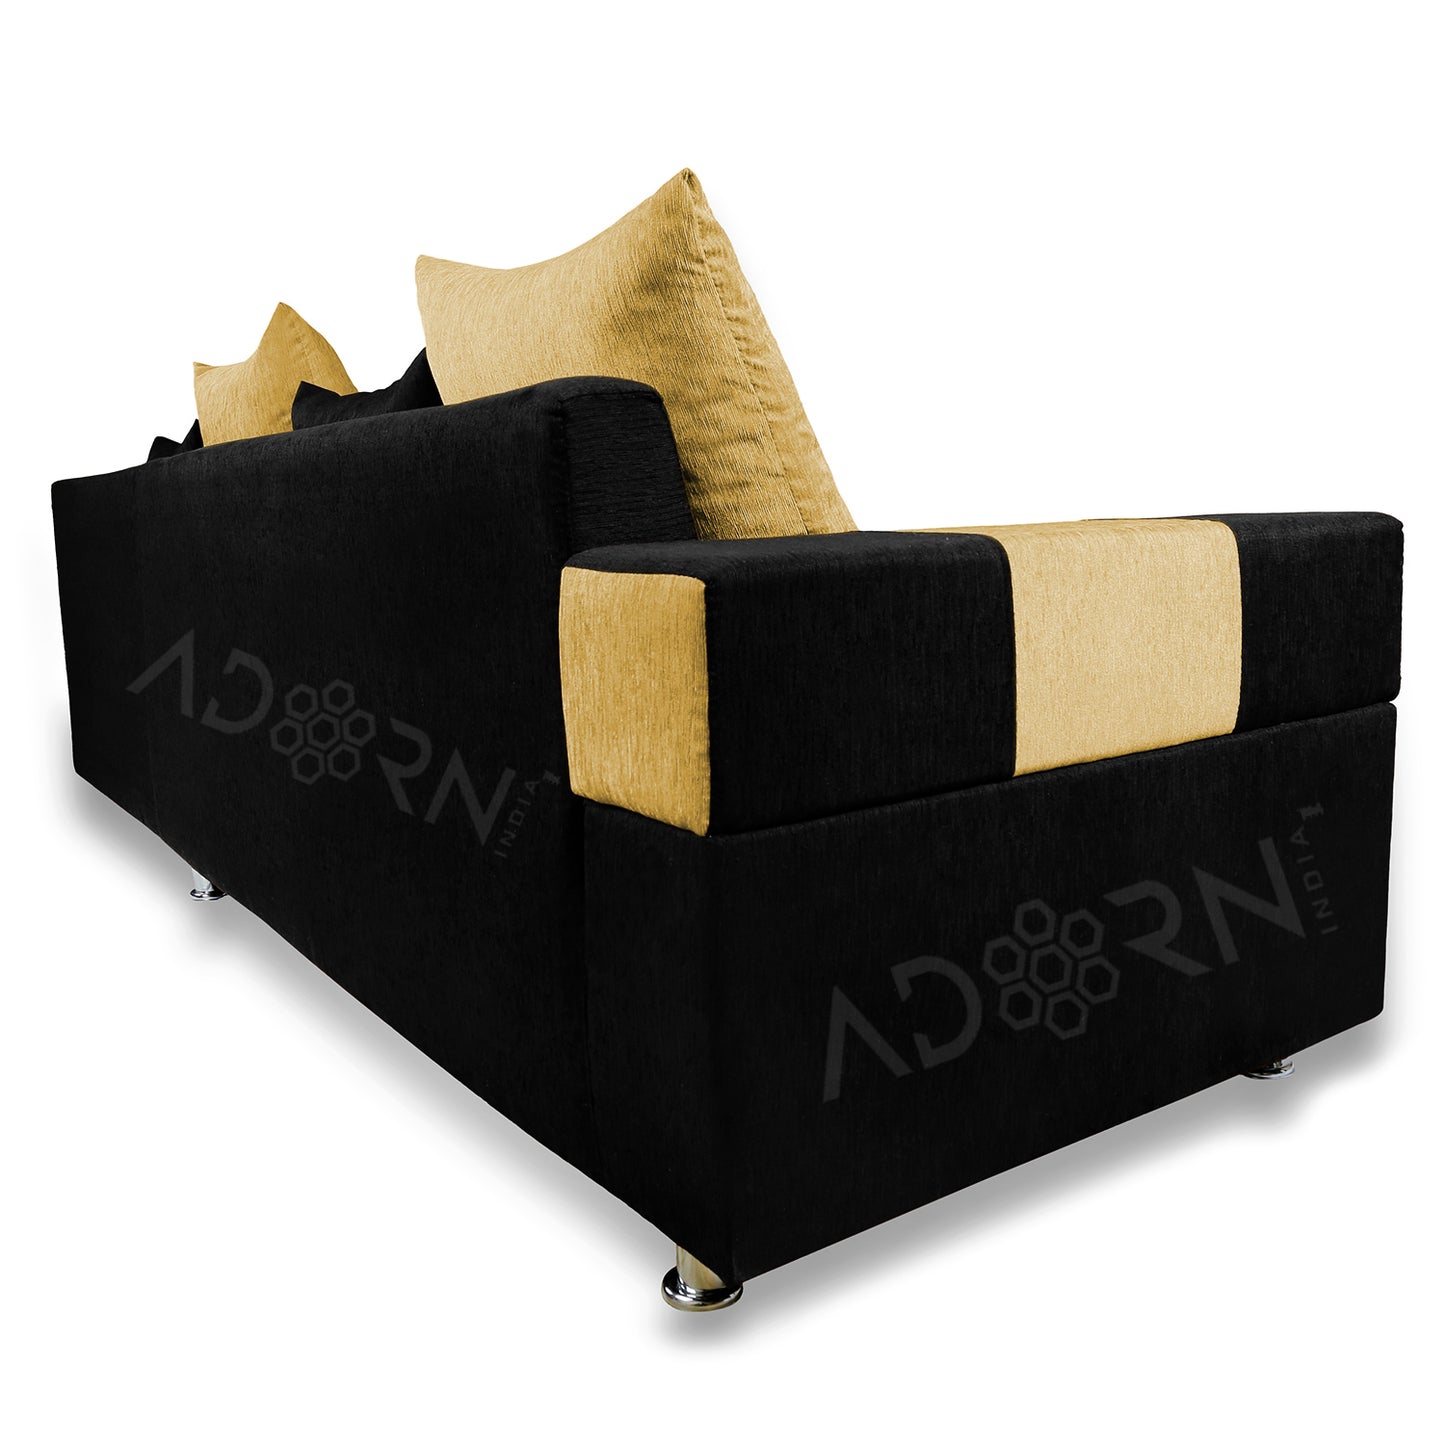 Adorn India Adillac 6 Seater Corner Sofa(Right Side)(Yellow & Black)